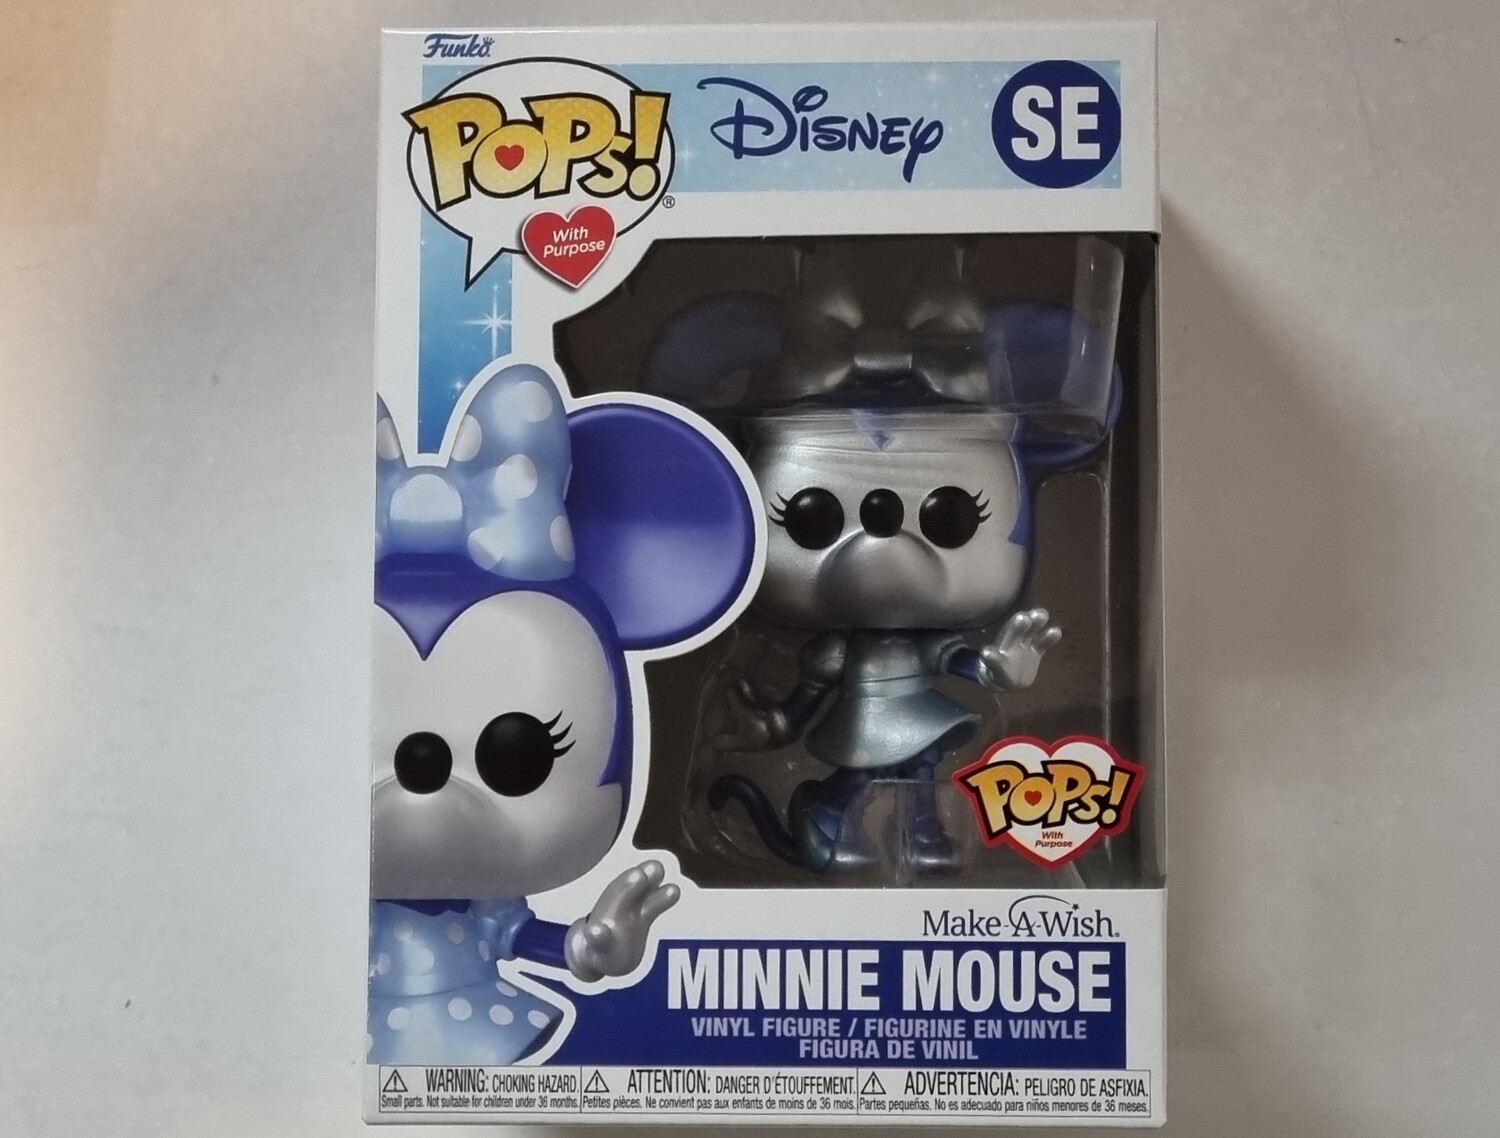 Funko Pop!, Minnie Mouse, #SE, Make a Wish, Pops With Purpose, Disney